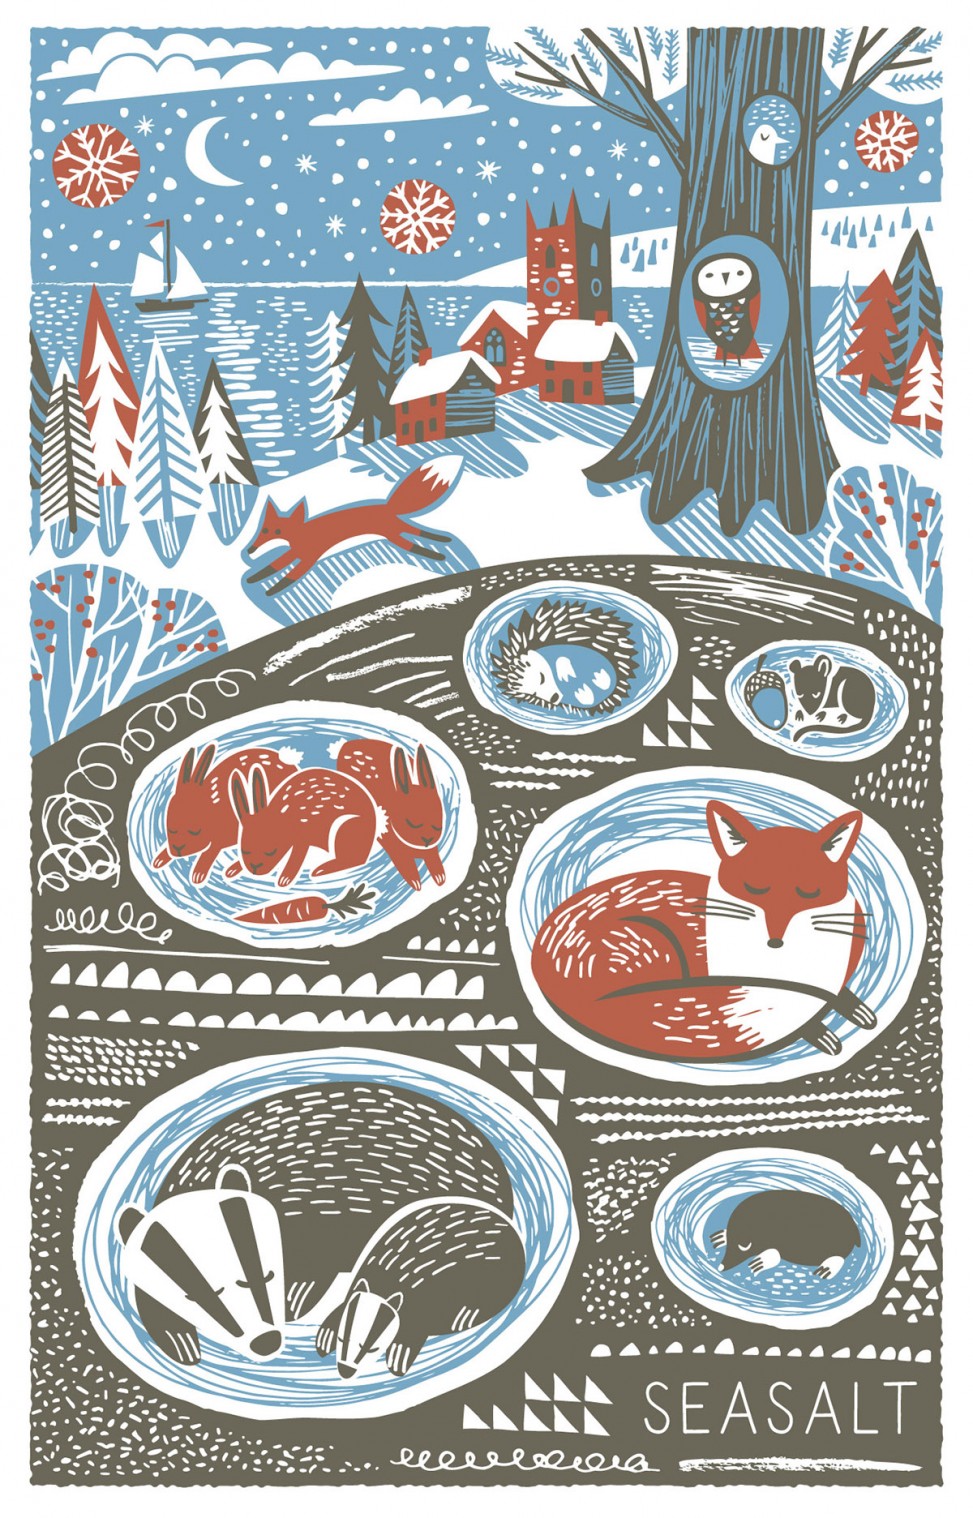 Winter burrows christmas tea towel print by Matt Johnson for Seasalt Cornwall